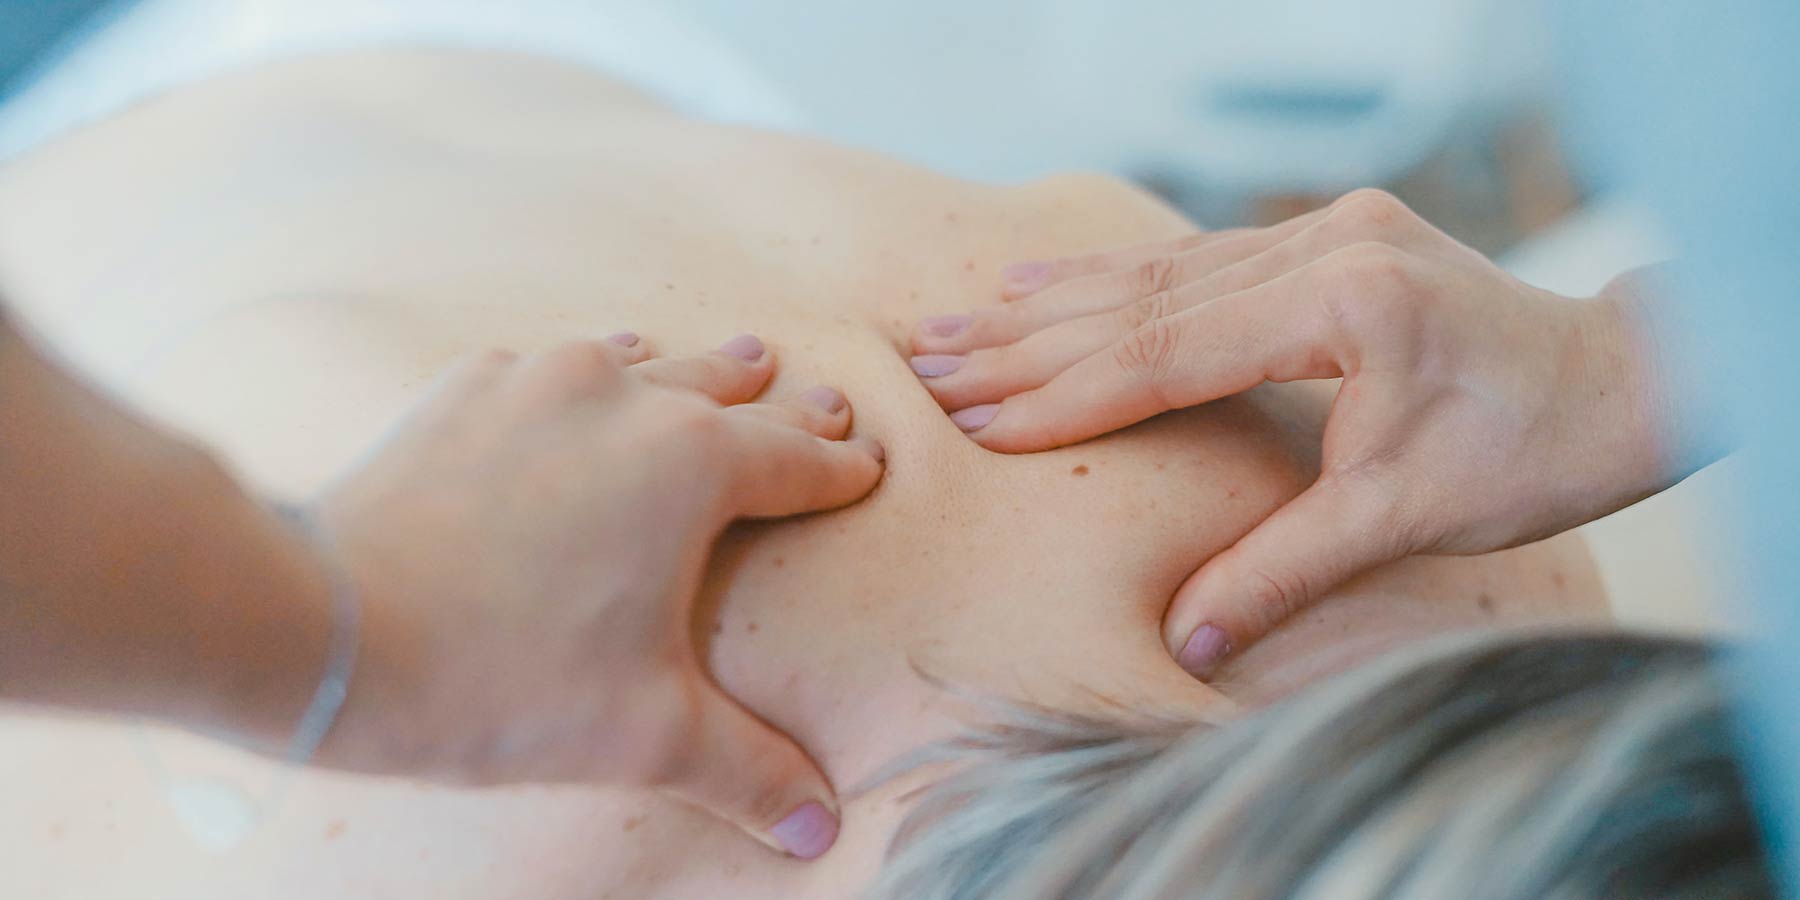 Pemberton Registered Massage Therapy